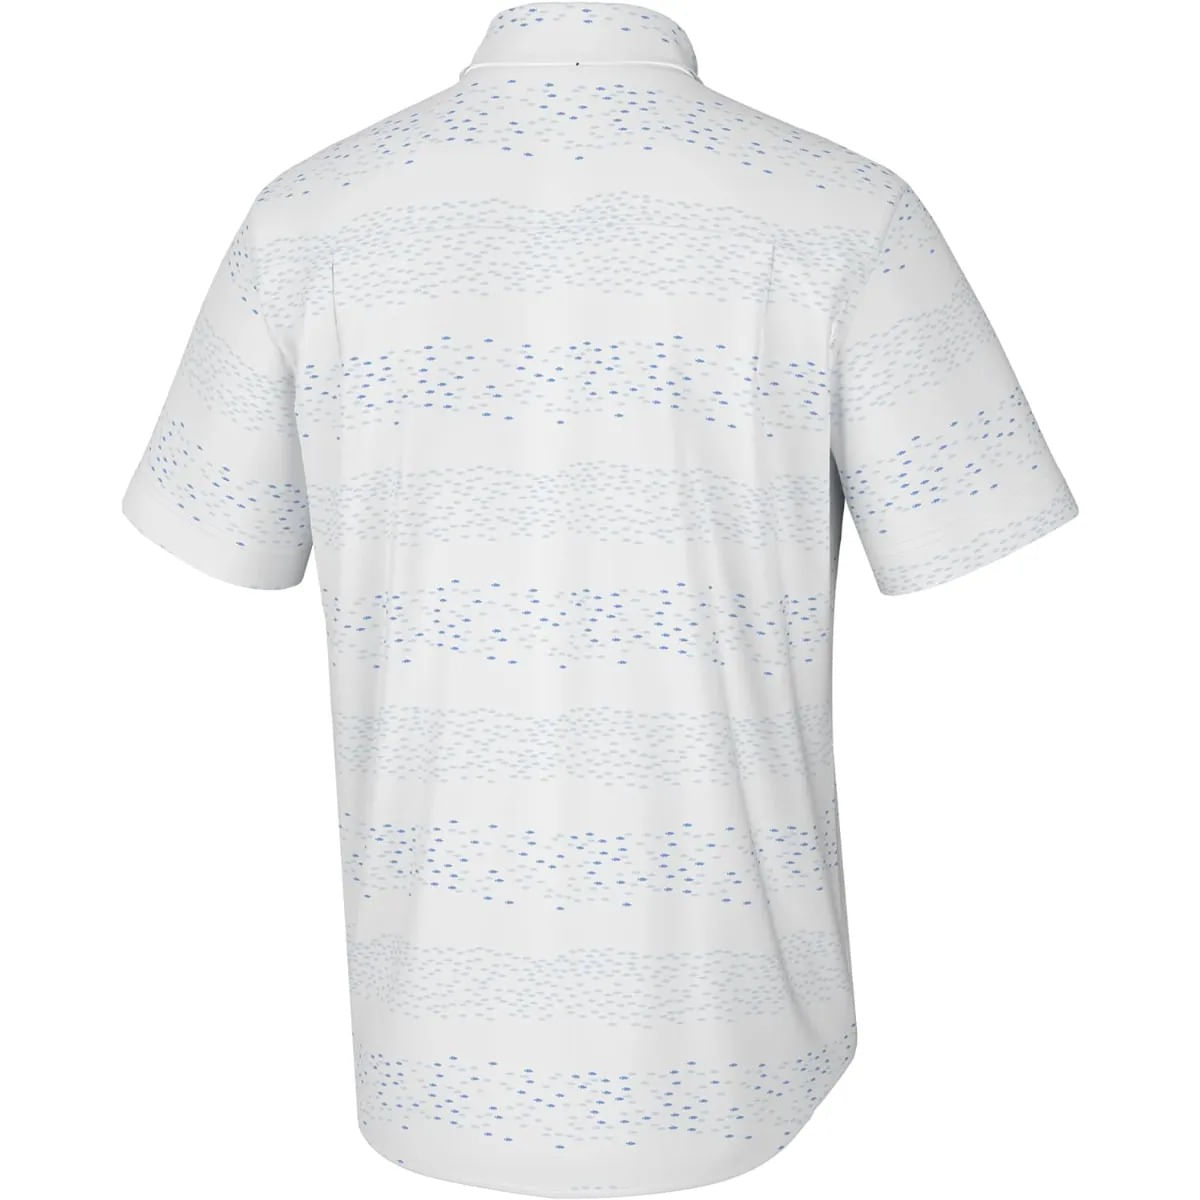 Huk Up Stream Kona Short Sleeve Button Down Shirt - Men's White XL